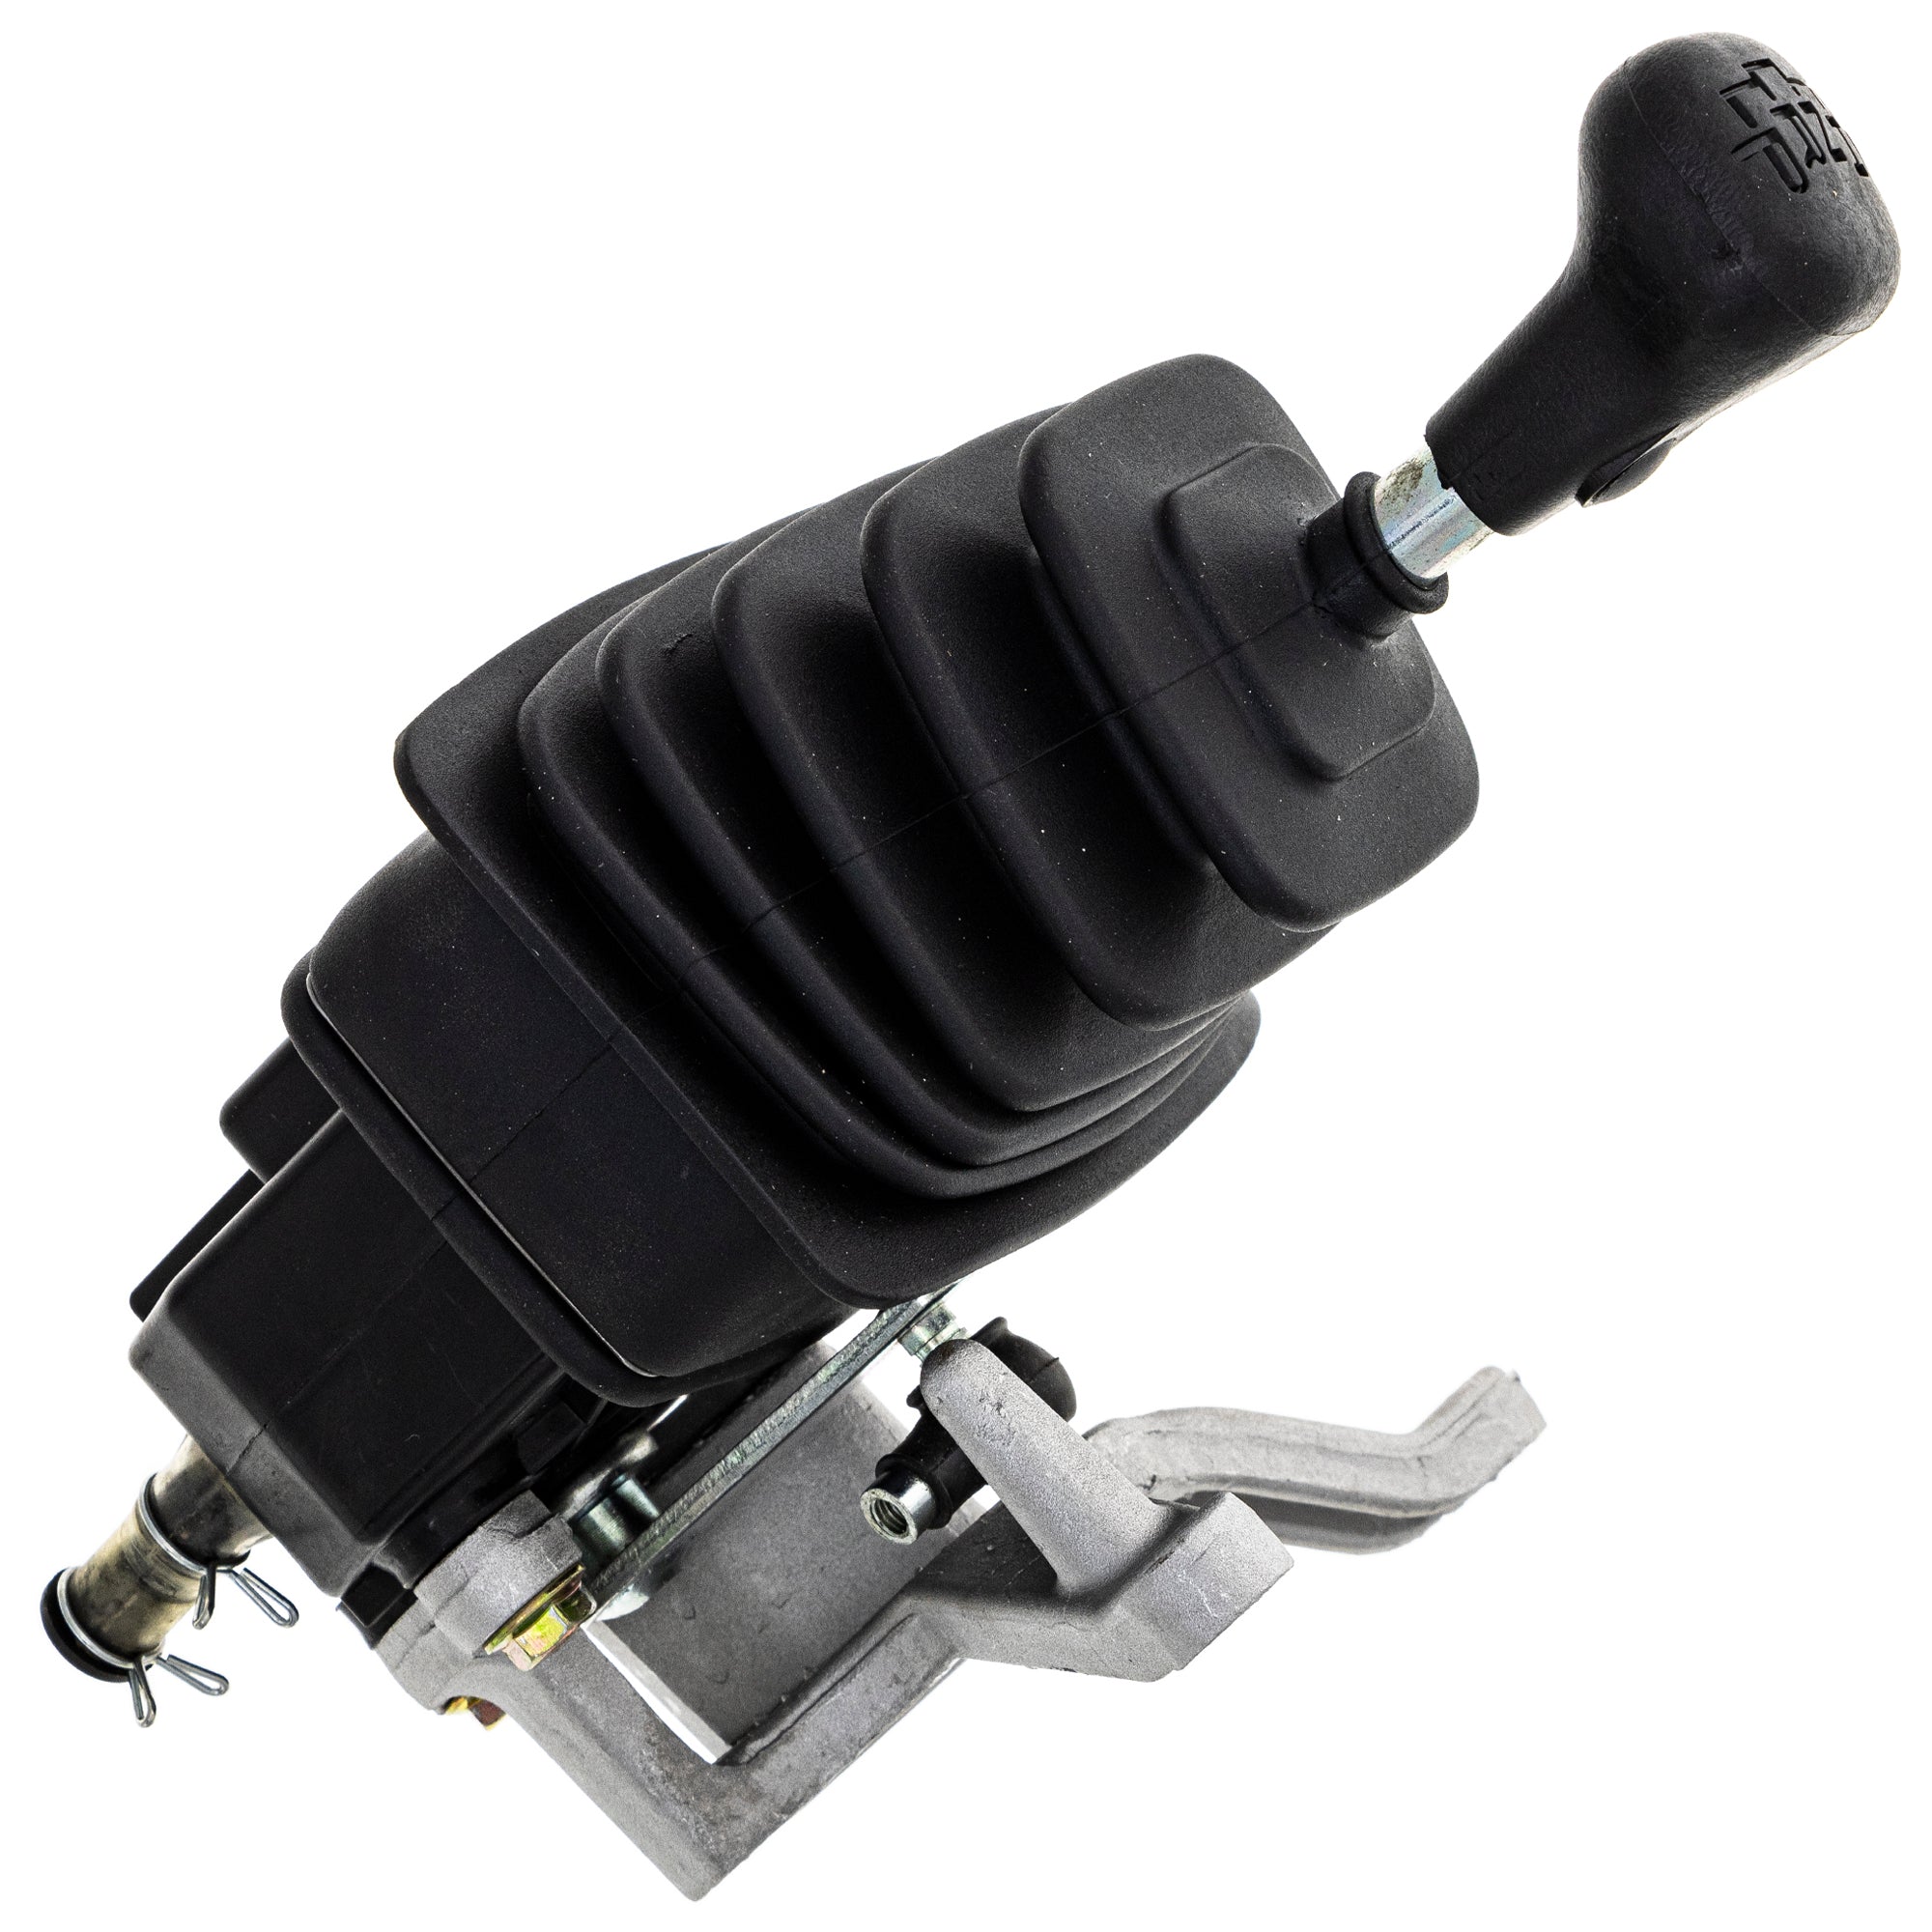 Gear Shifter Shaft With Rod Linkage For Yamaha 5UH-18300-02-00 5KM-18300-03-00 5KM-18300-02-00